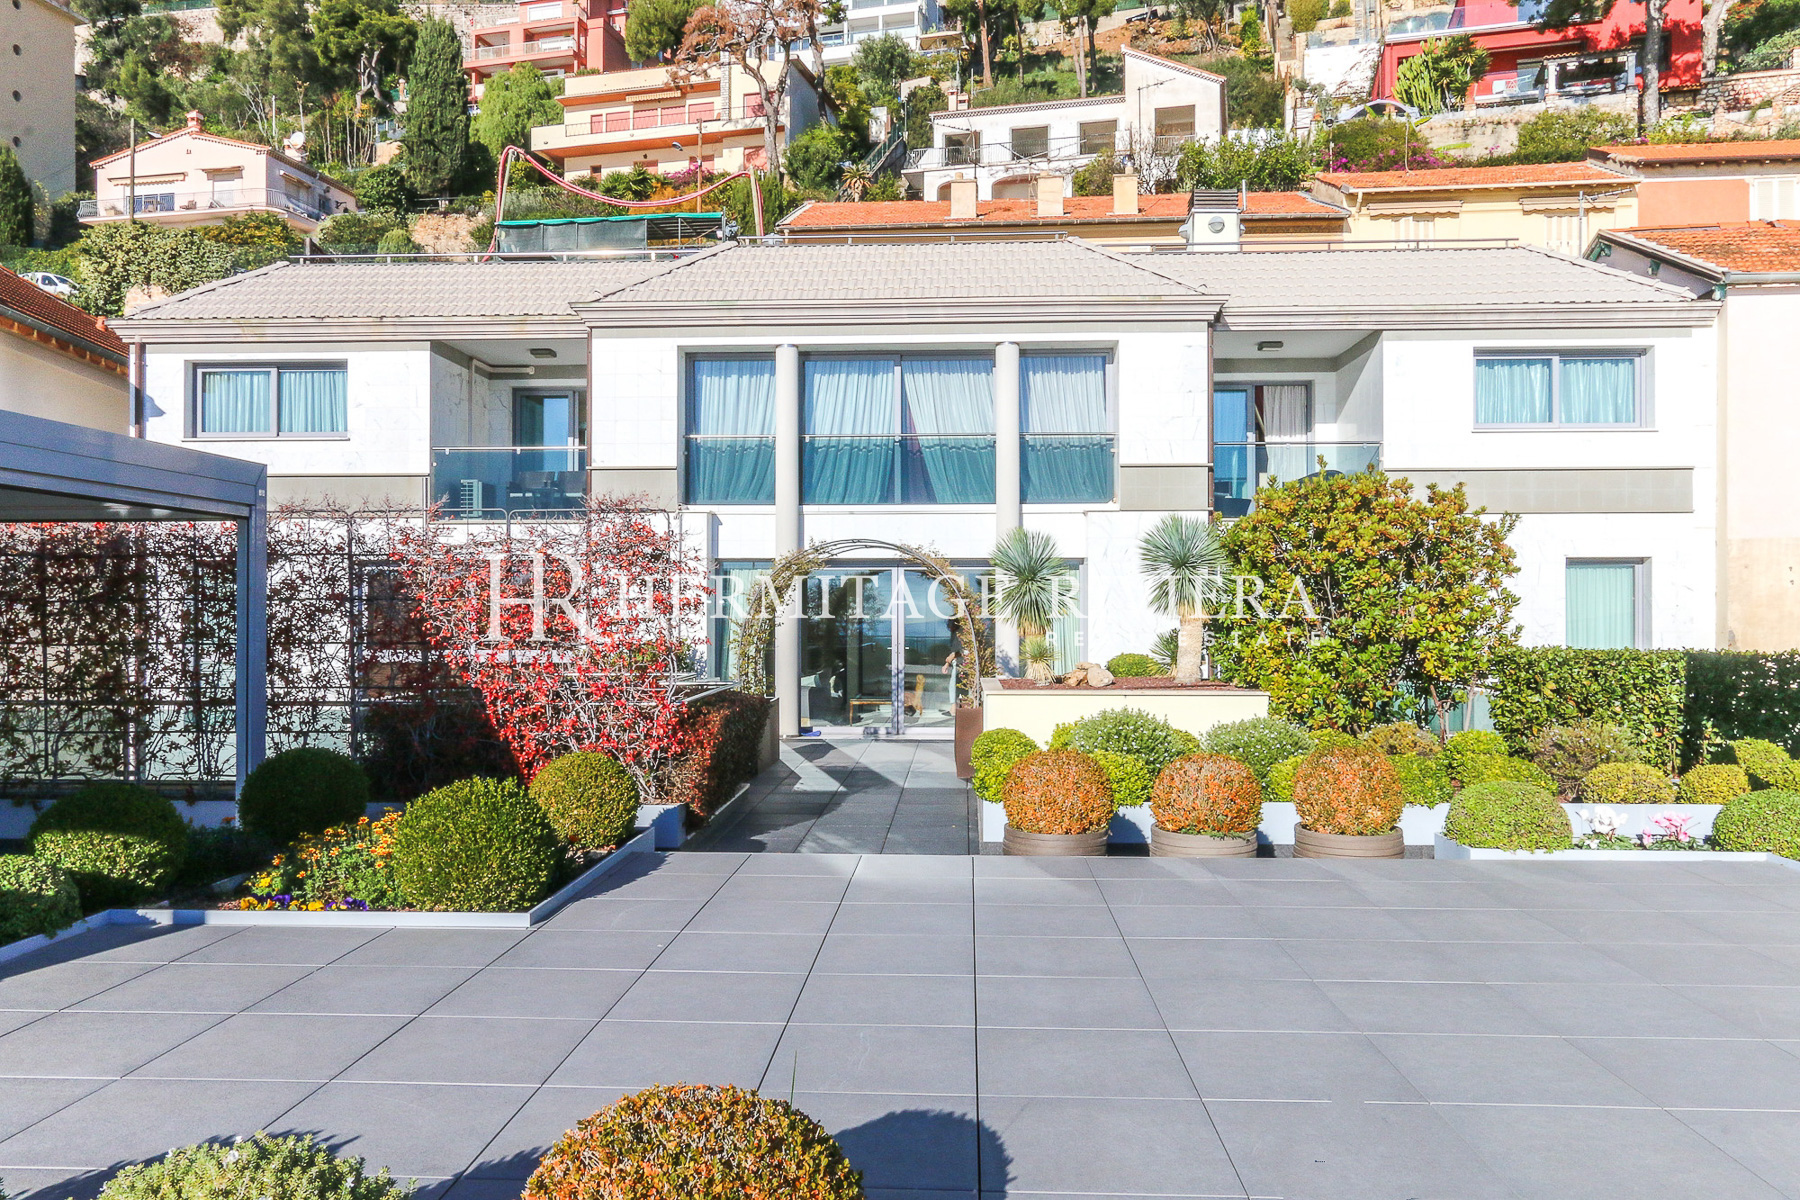 Sumptuous villa on the border with Monaco (image 2)